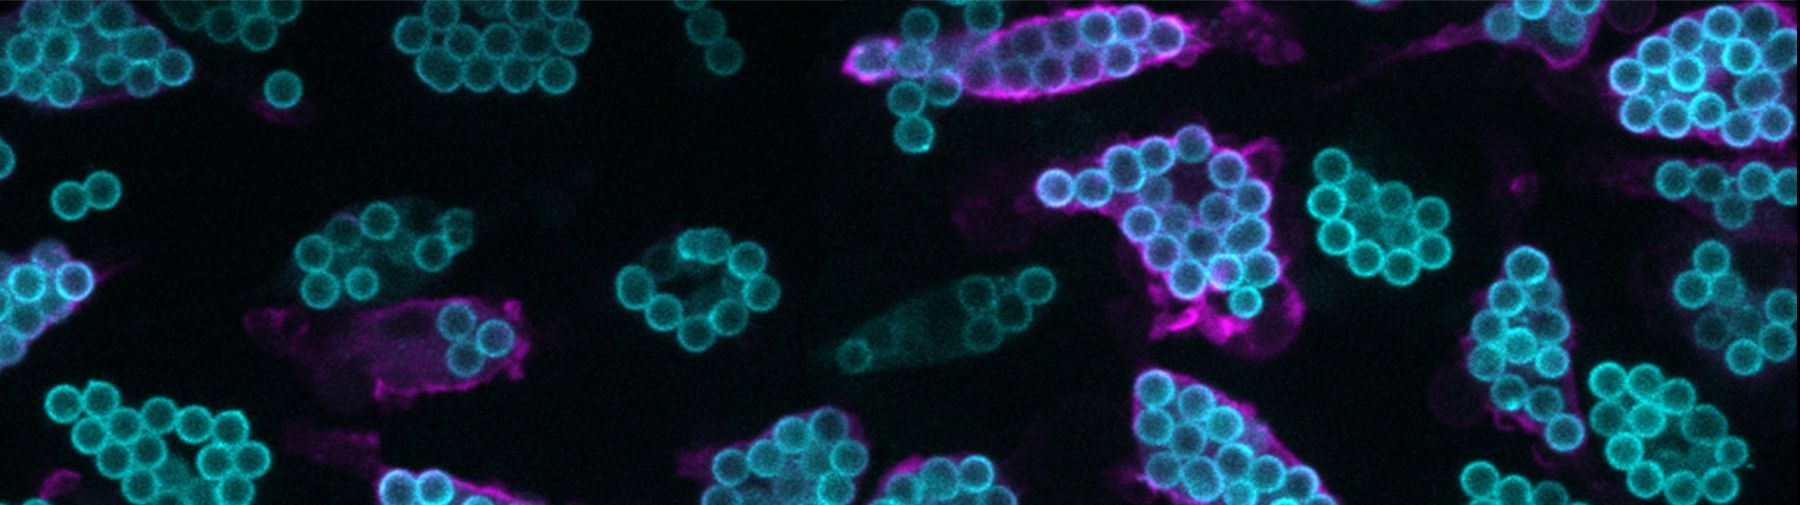 Image of macrophage with internalized beads.